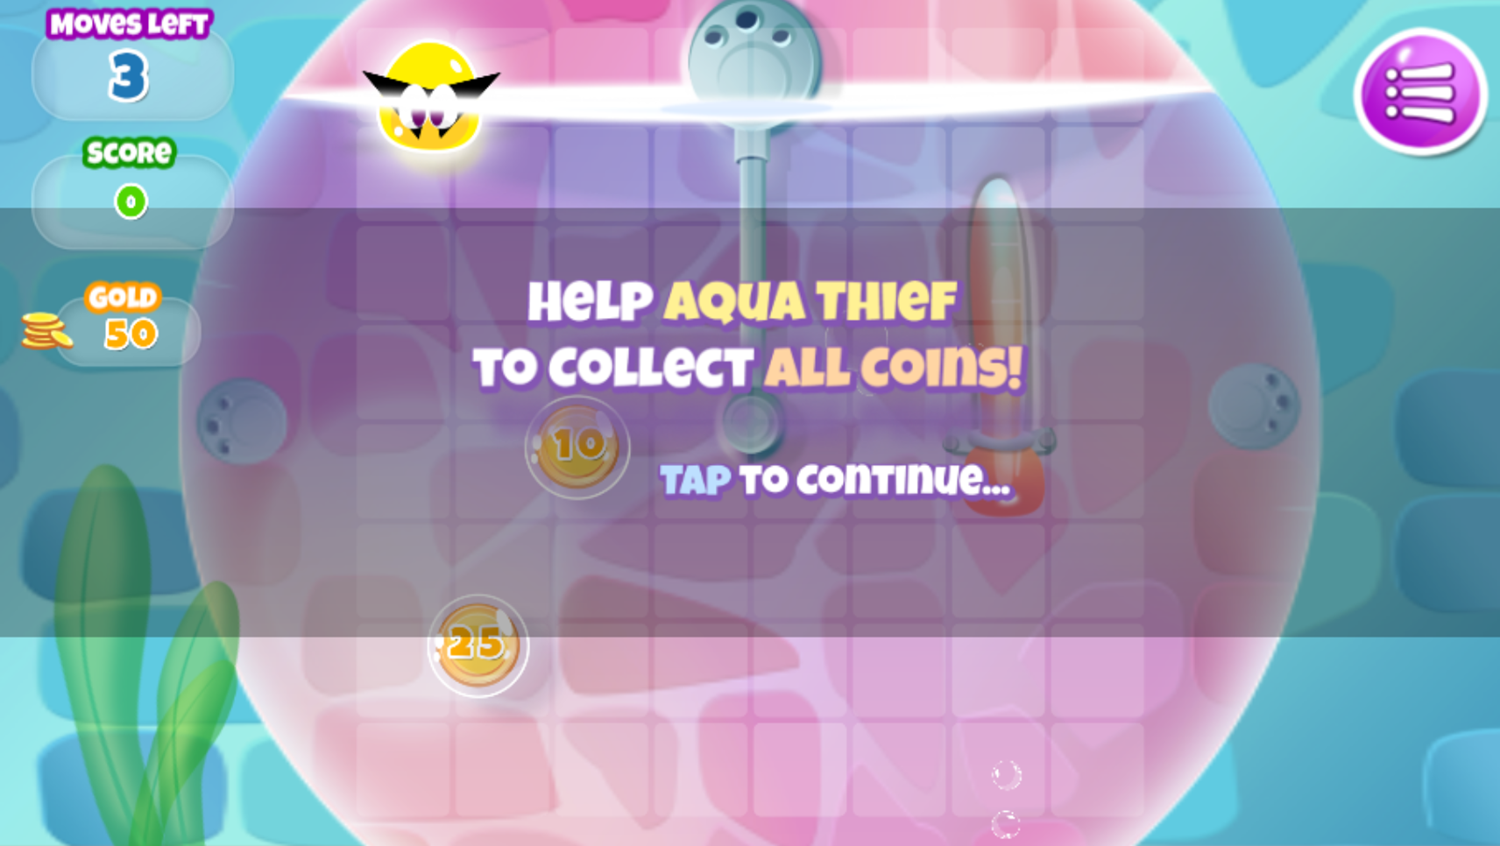 Aqua Thief Game Level Start Screenshot.